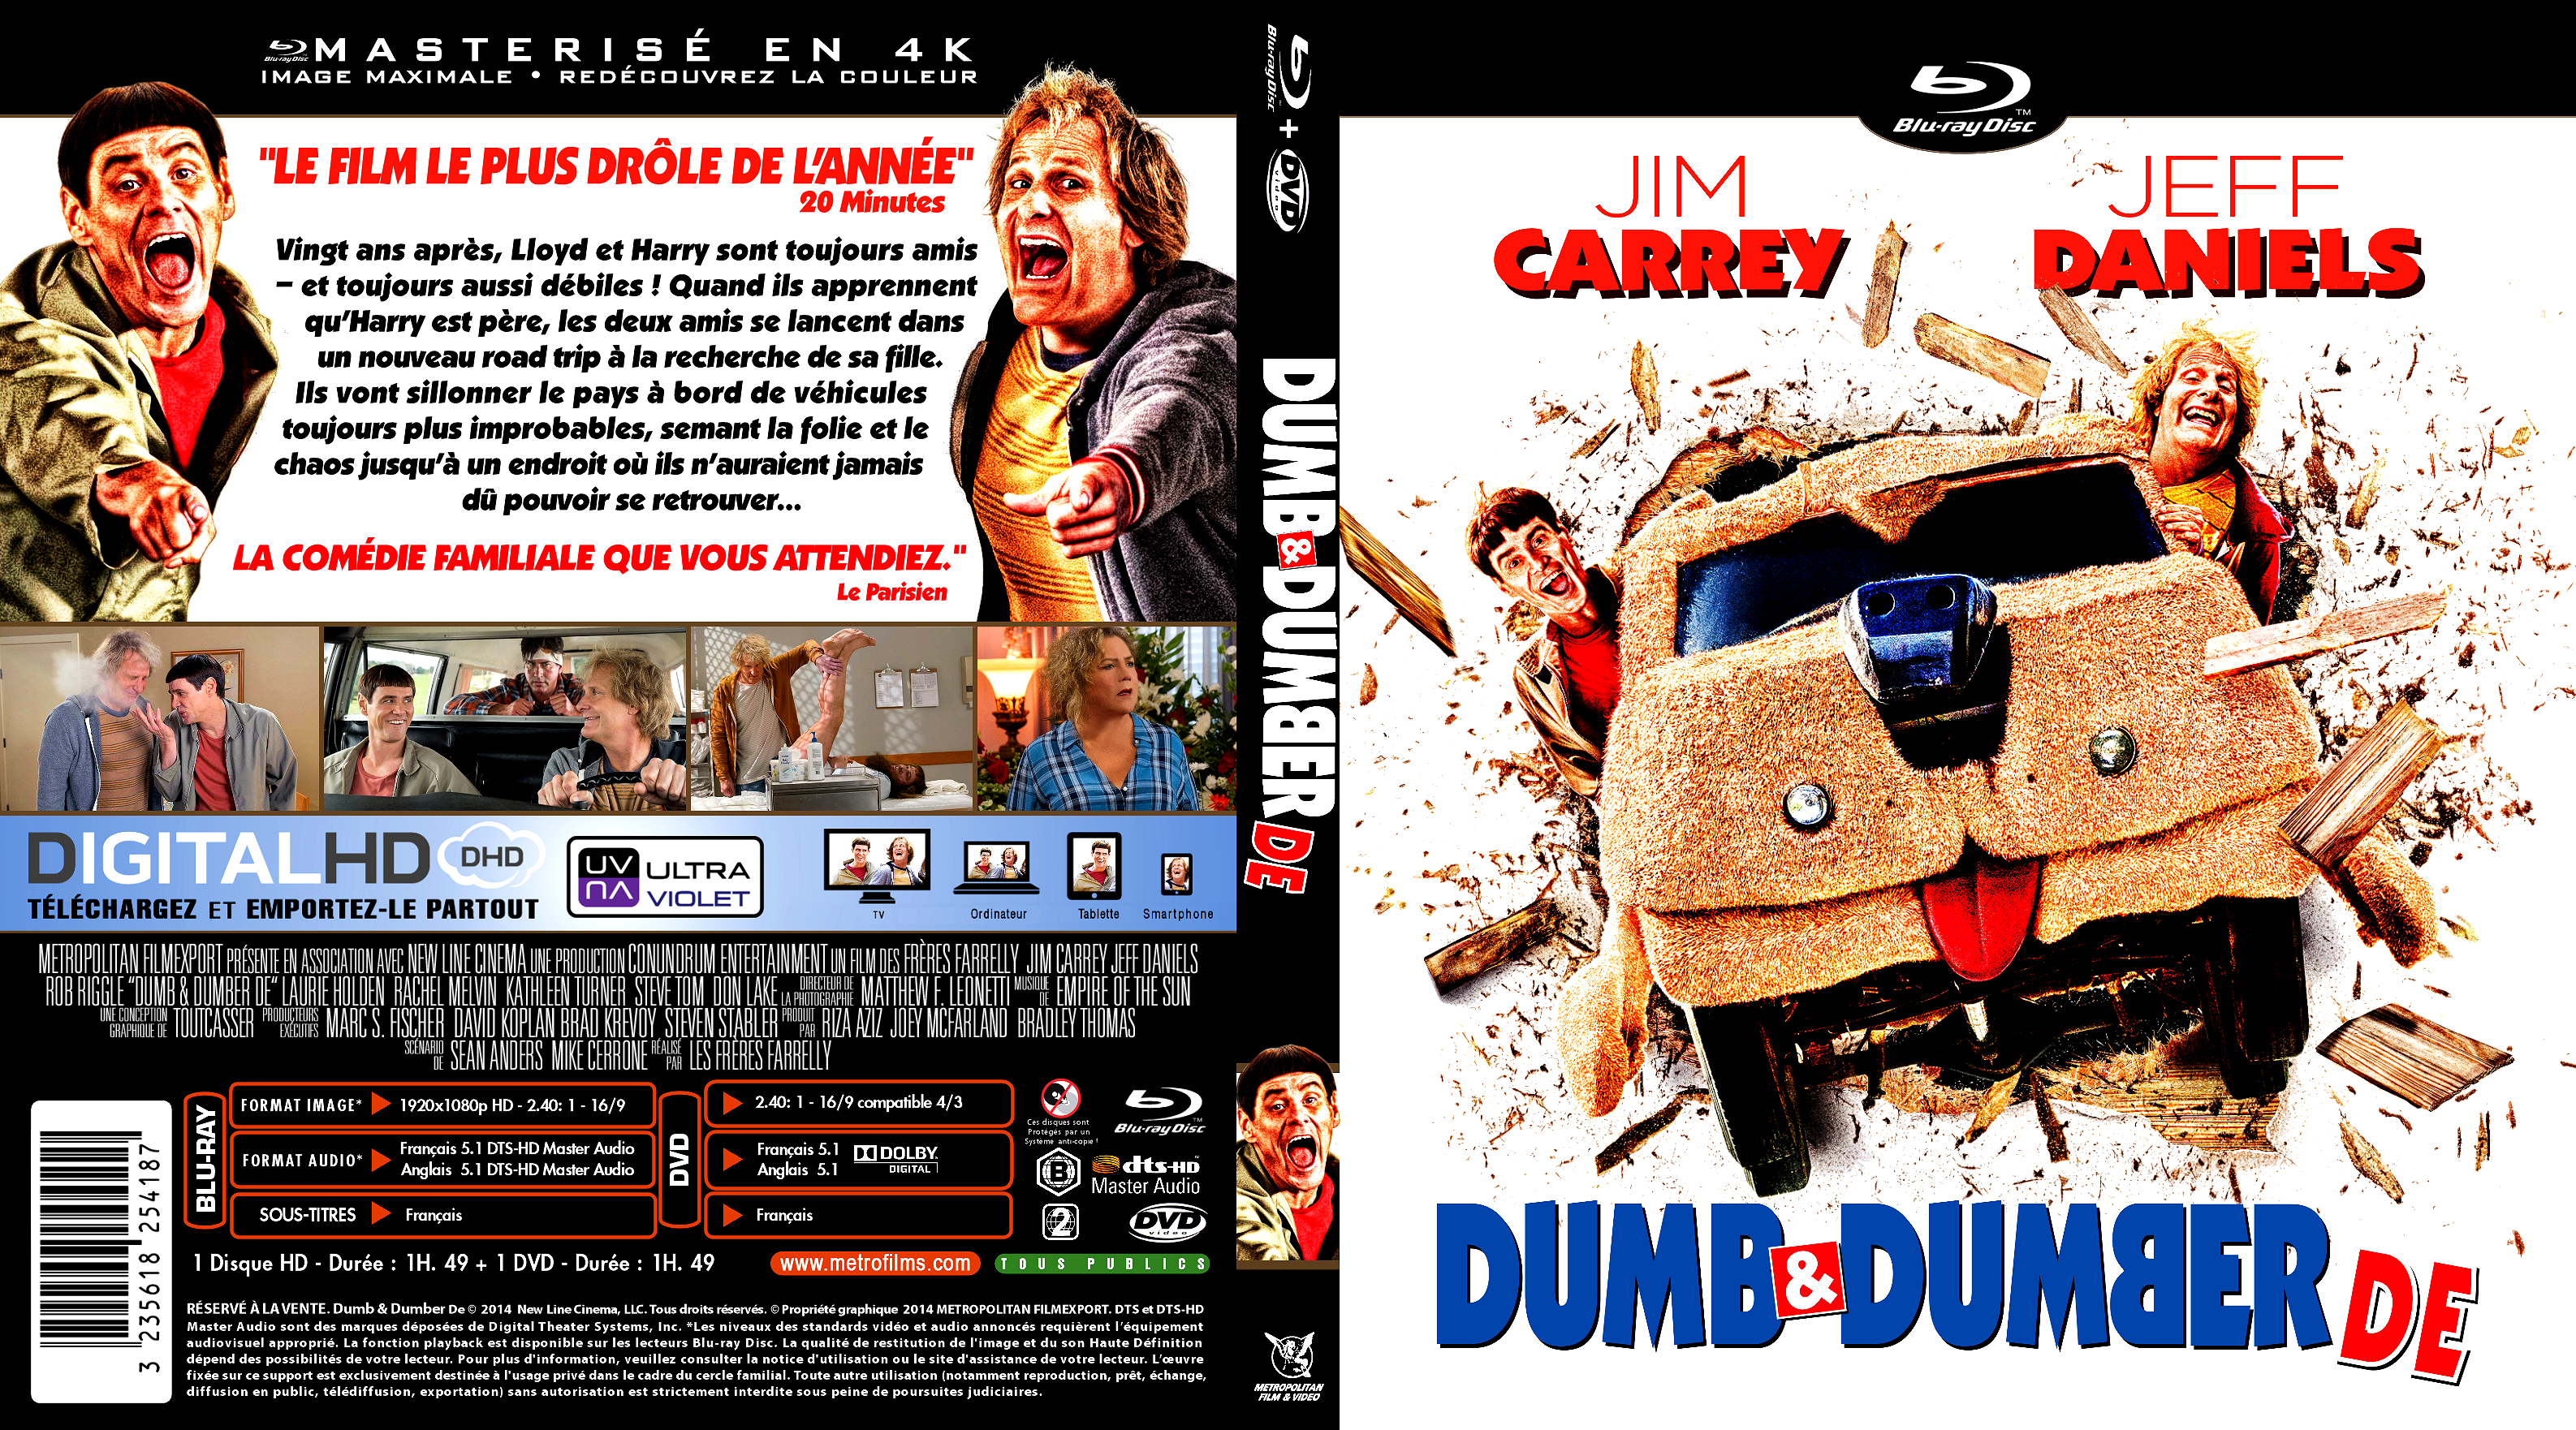 Jaquette DVD Dumb & Dumber De custom (BLU-RAY)